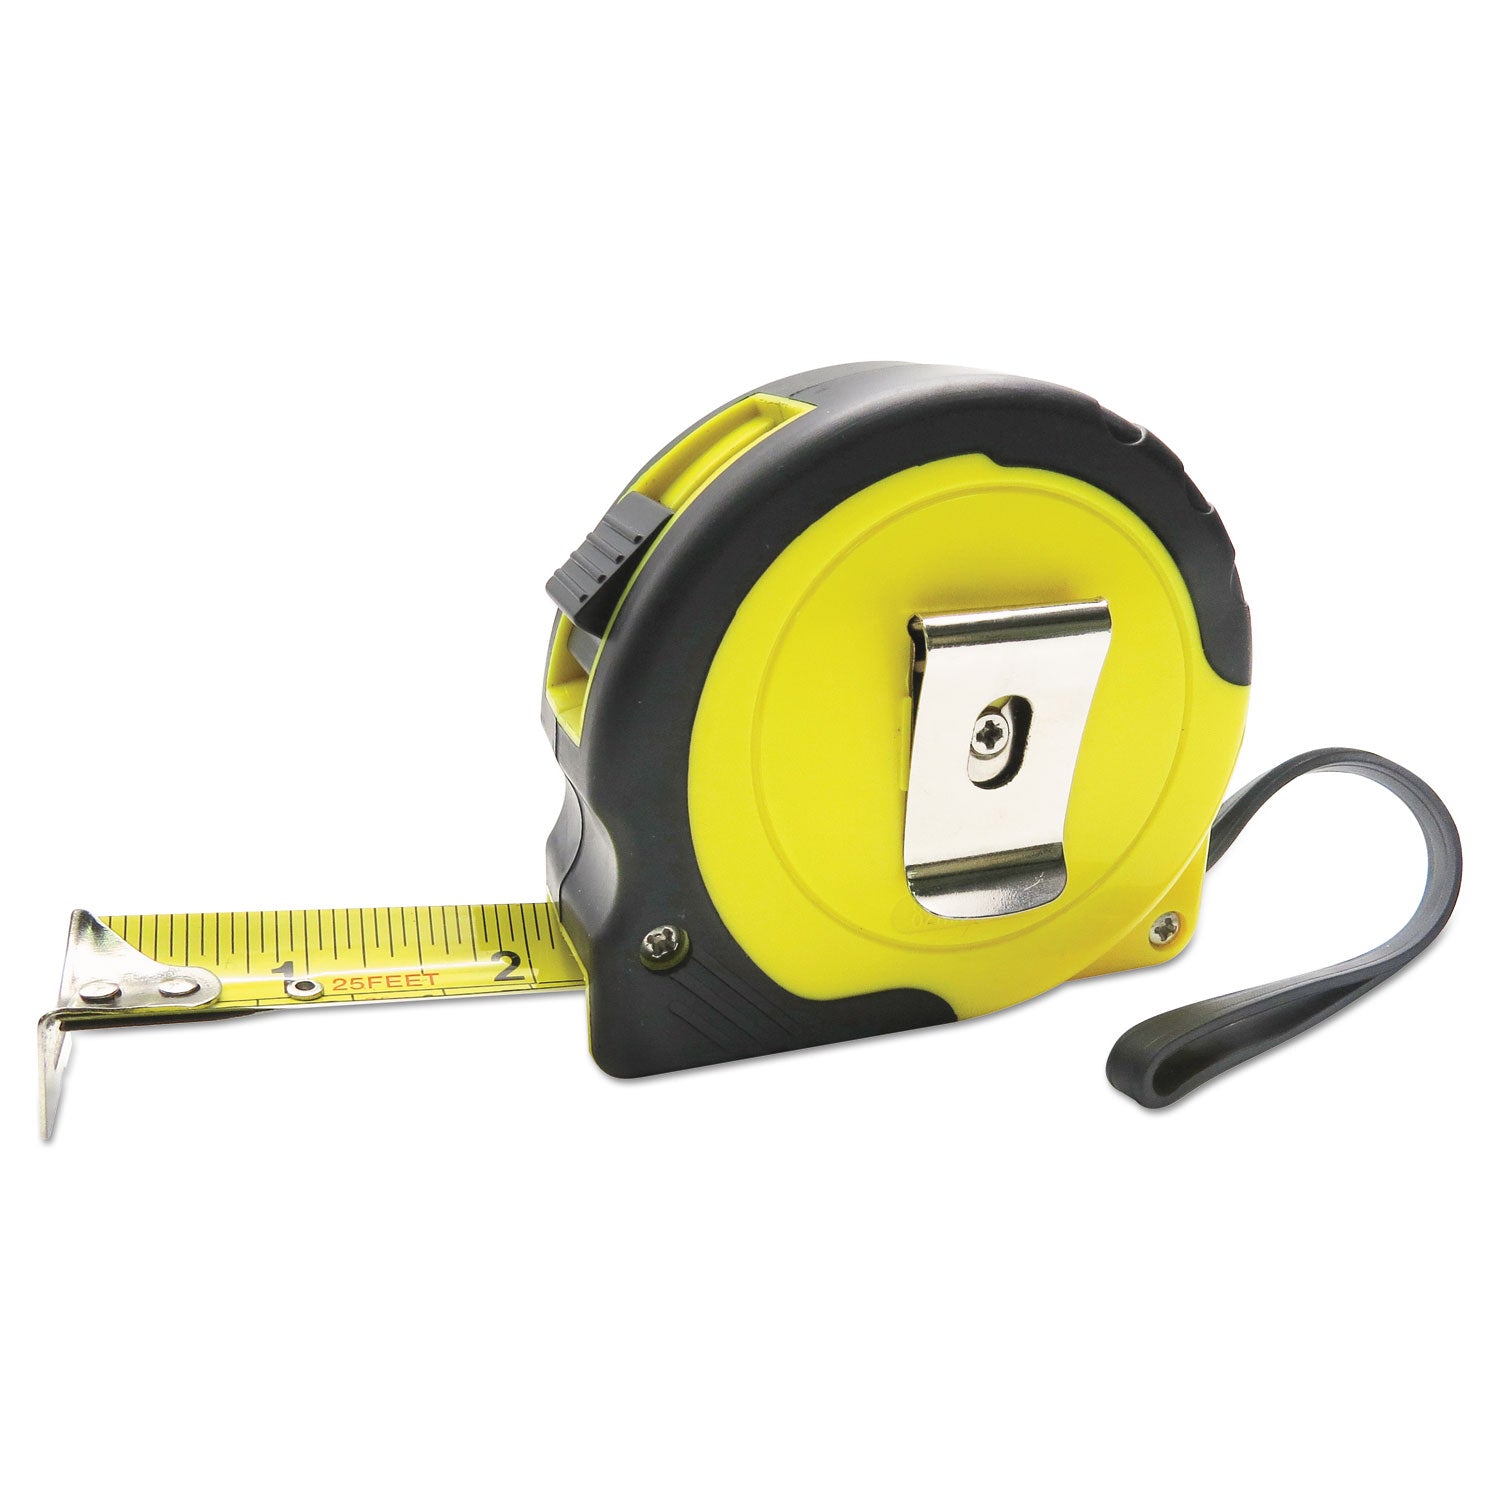 easy-grip-tape-measure-25-ft-plastic-case-black-and-yellow-1-16-graduations_bwktapem25 - 3